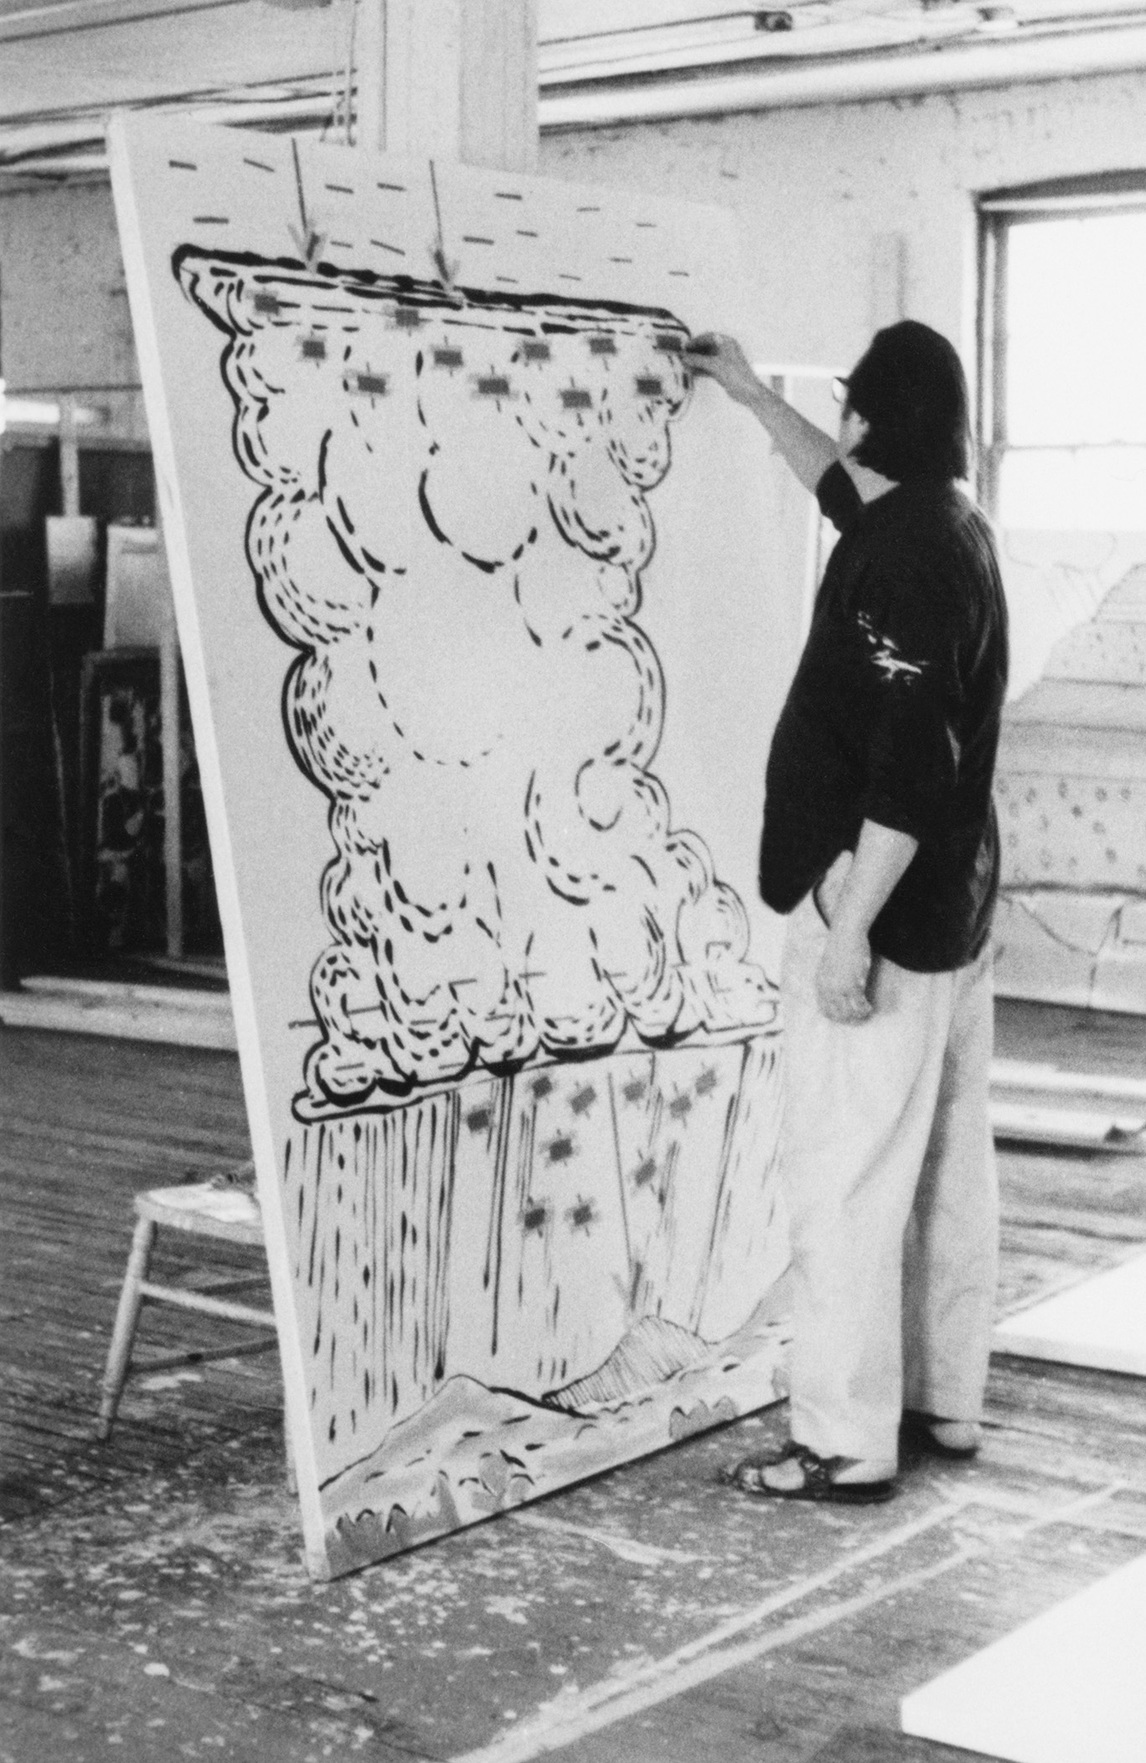 Paterson Ewen working on Cumulous Cloud as Generator, 1971